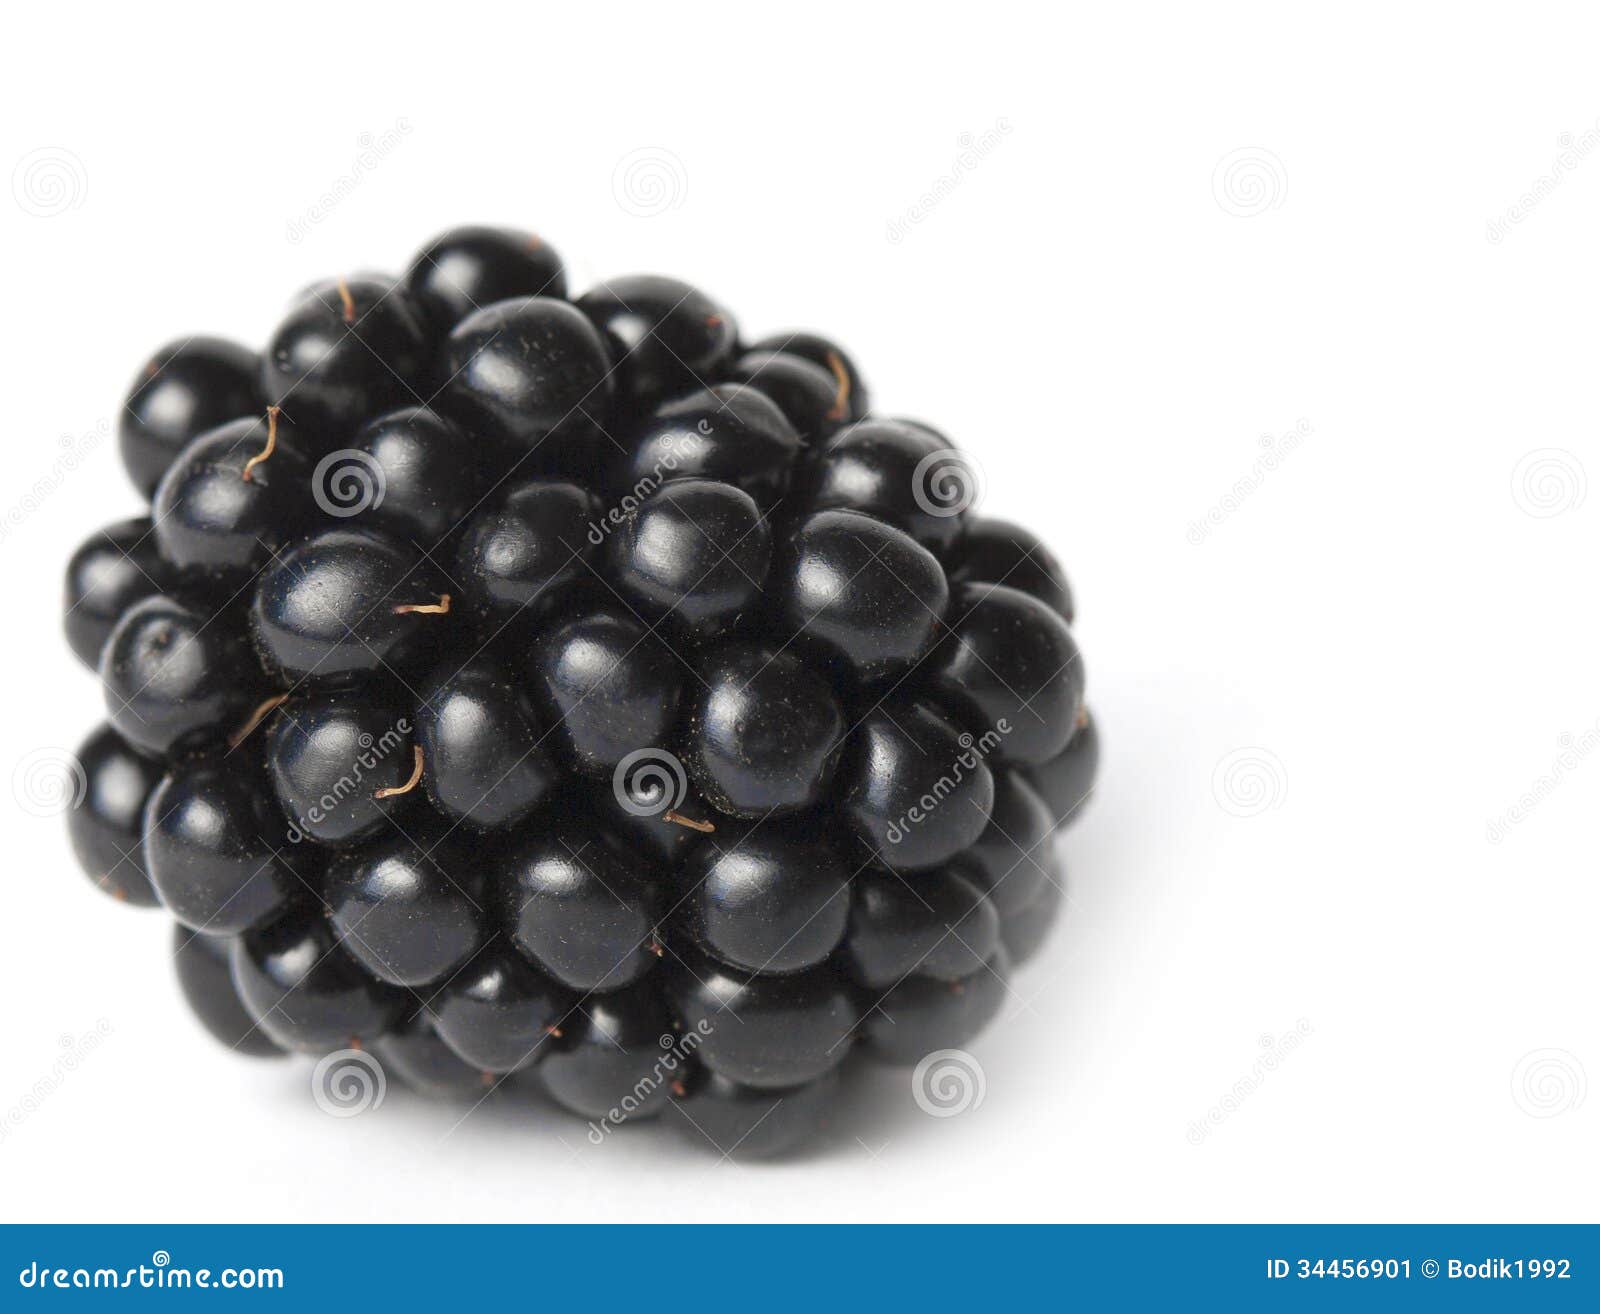 Blackberry - fruit stock image. Image of sweet, fruit - 34456901